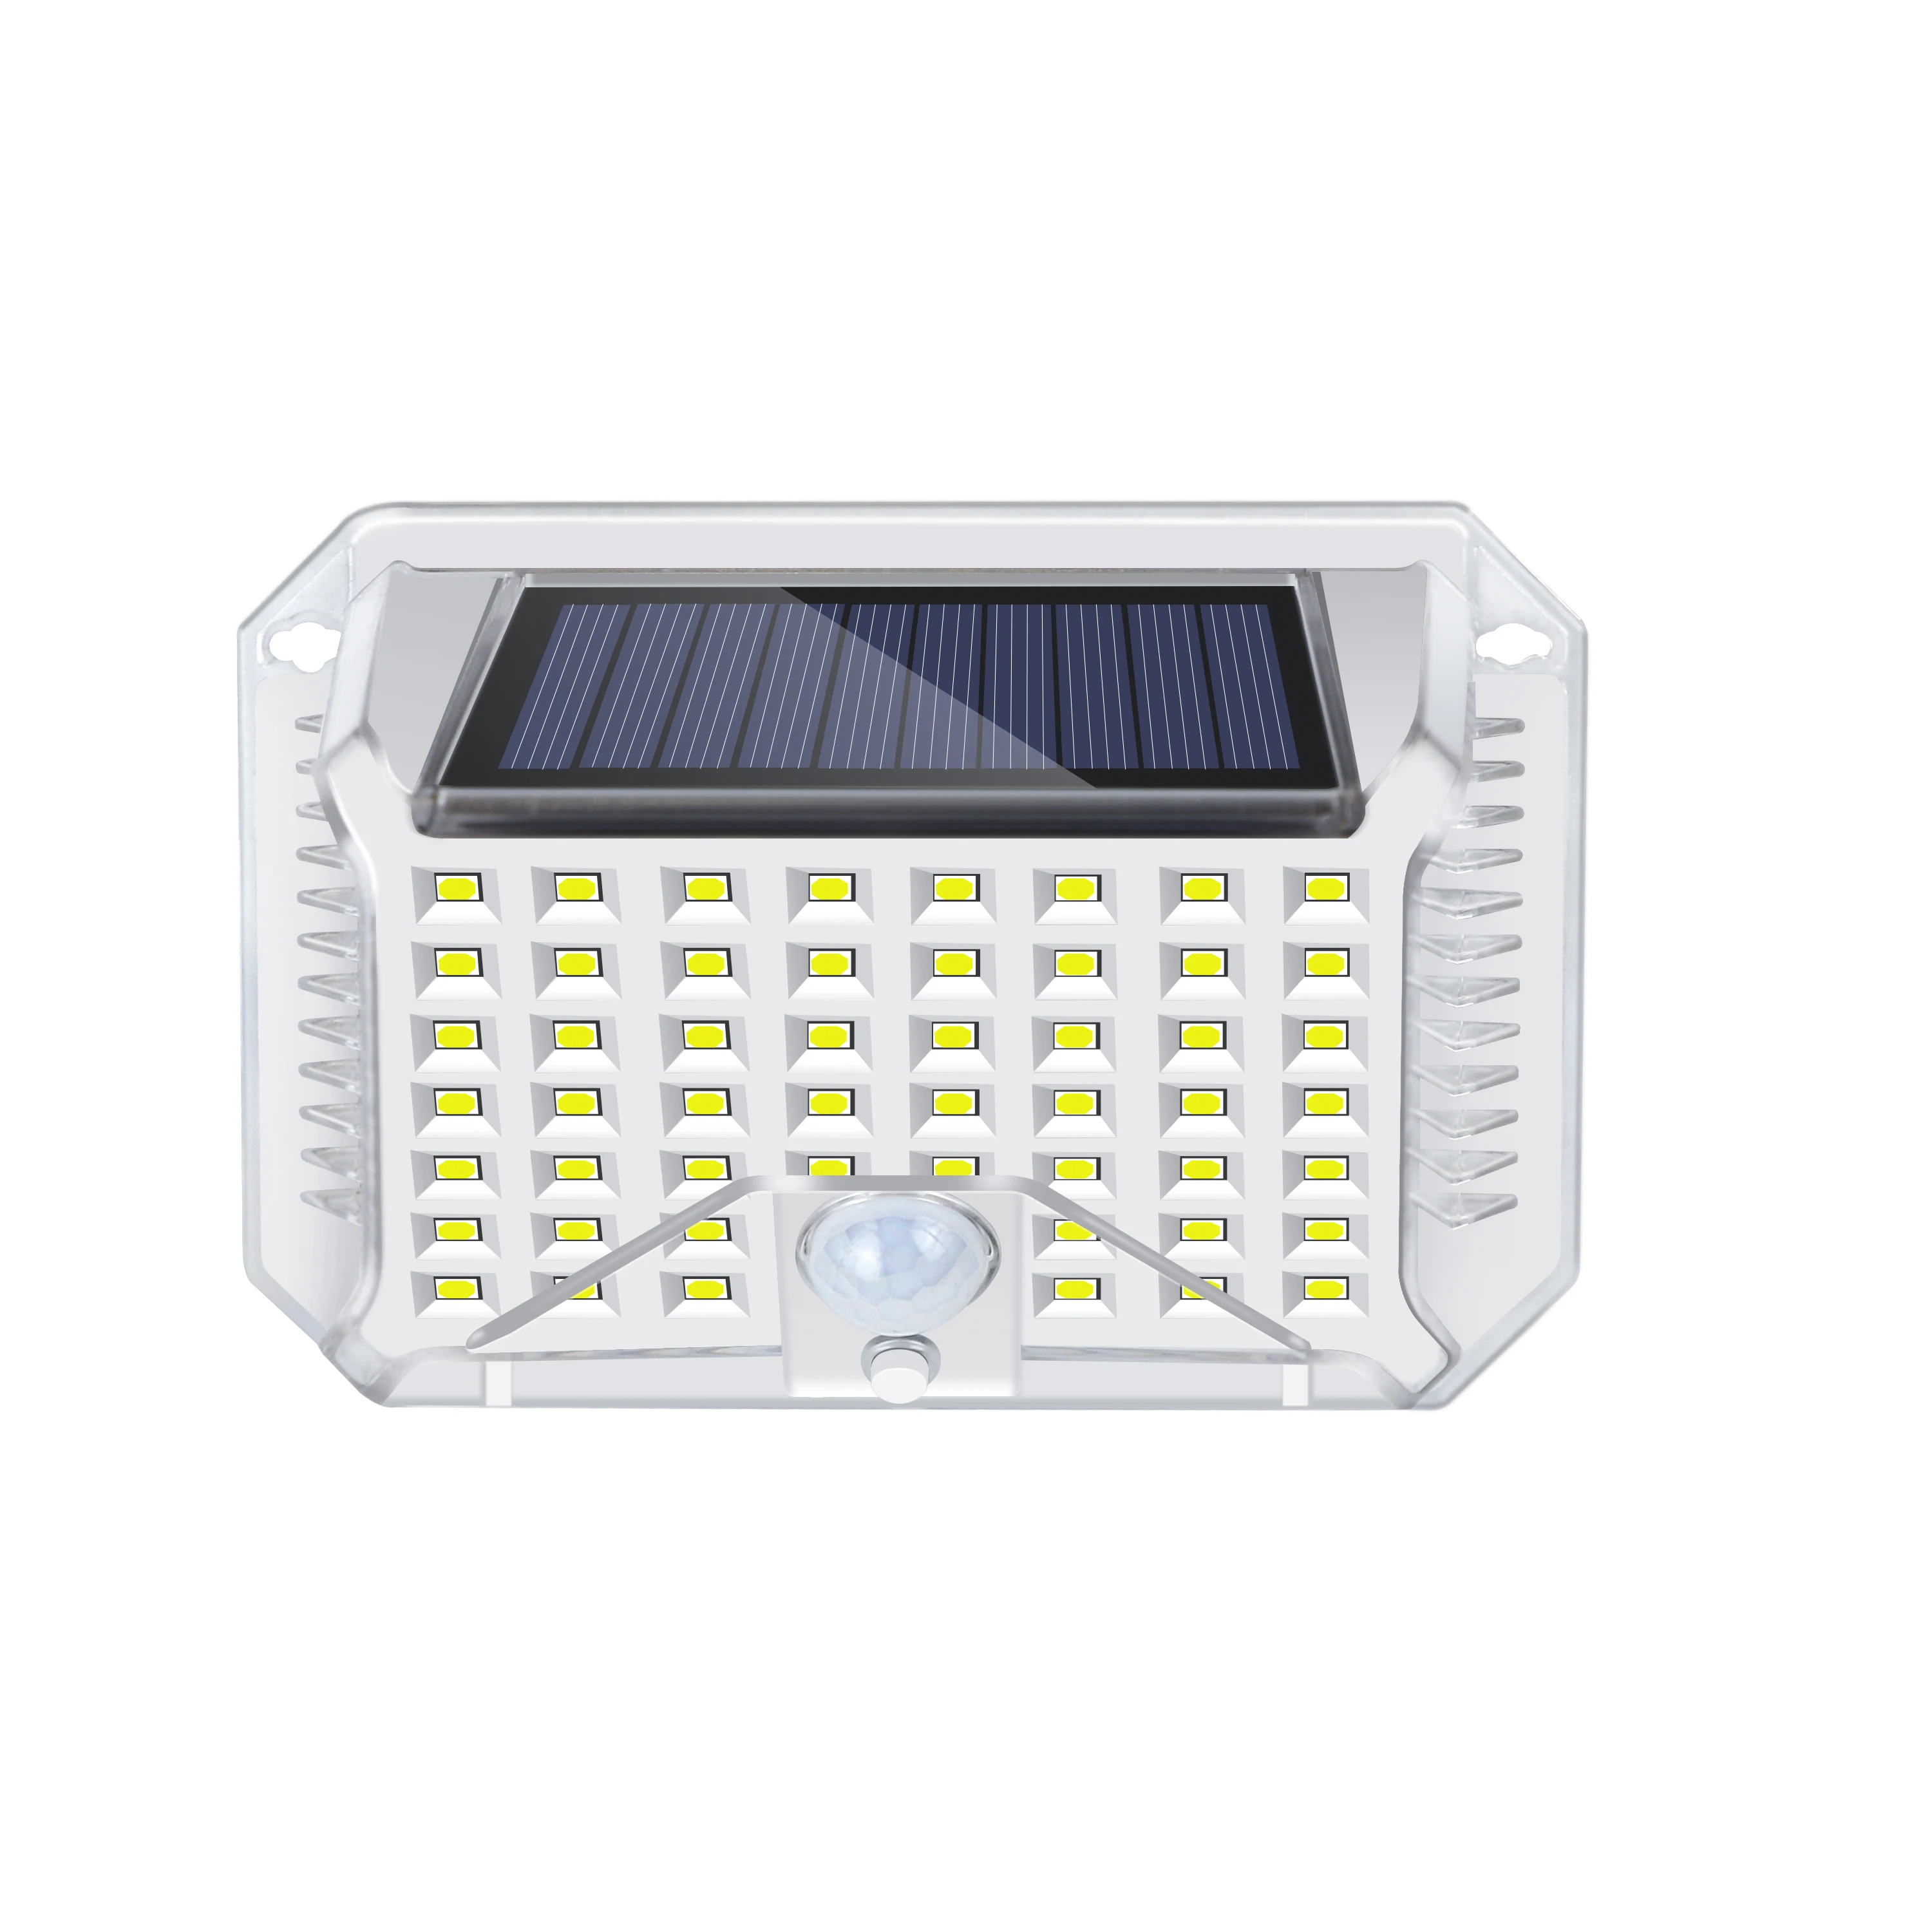 90pcs chip solar wall mounted light,IP 65 waterproof solar light garden